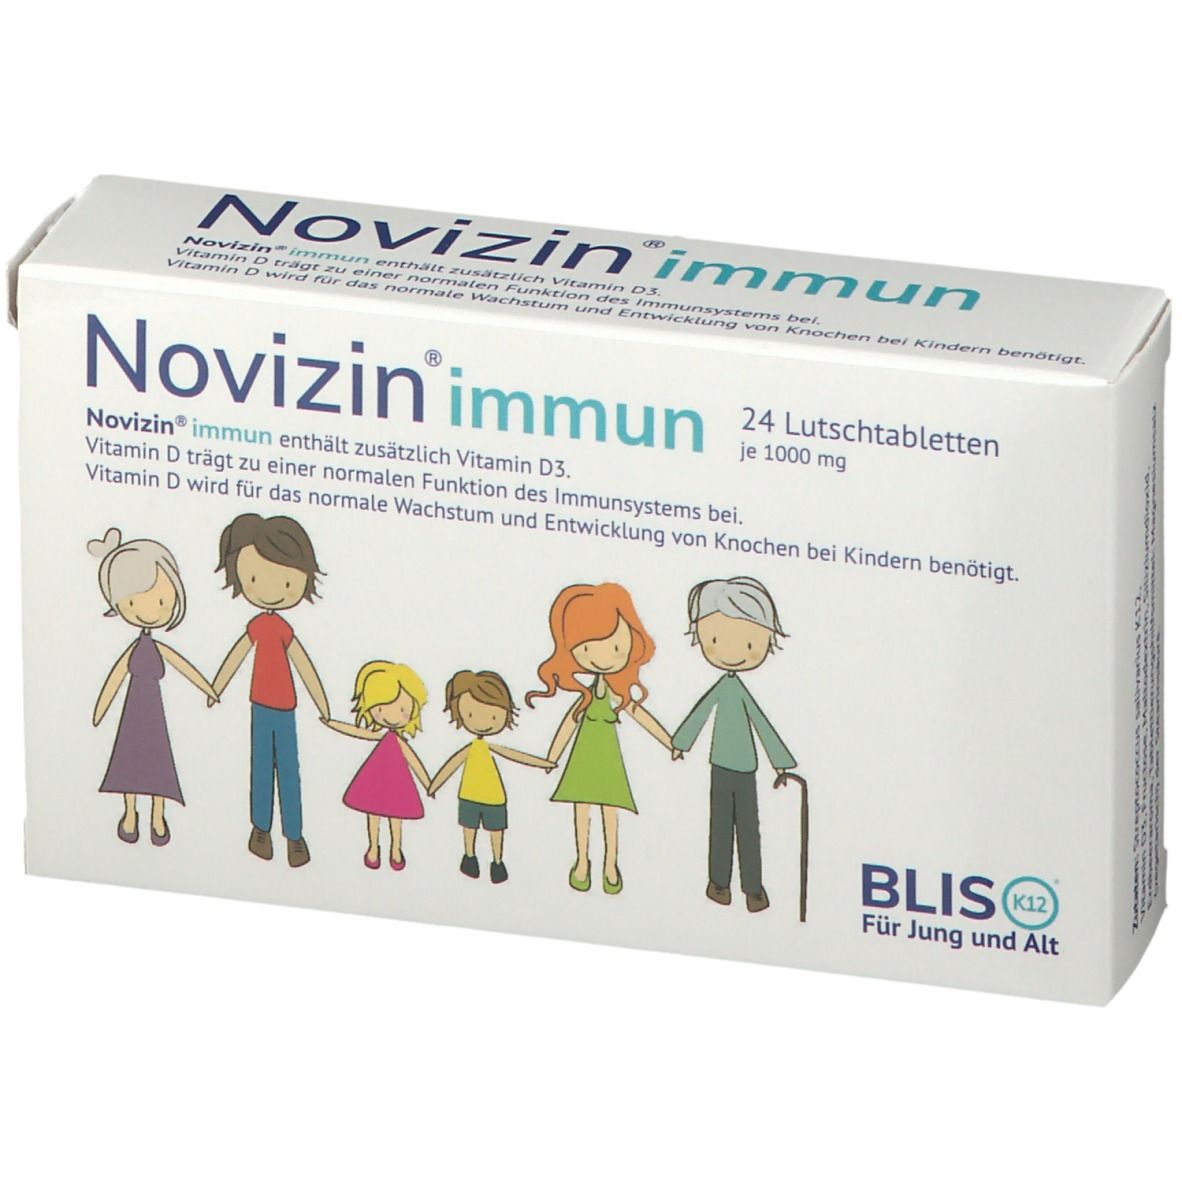 Novizin® immun Lutschtabletten